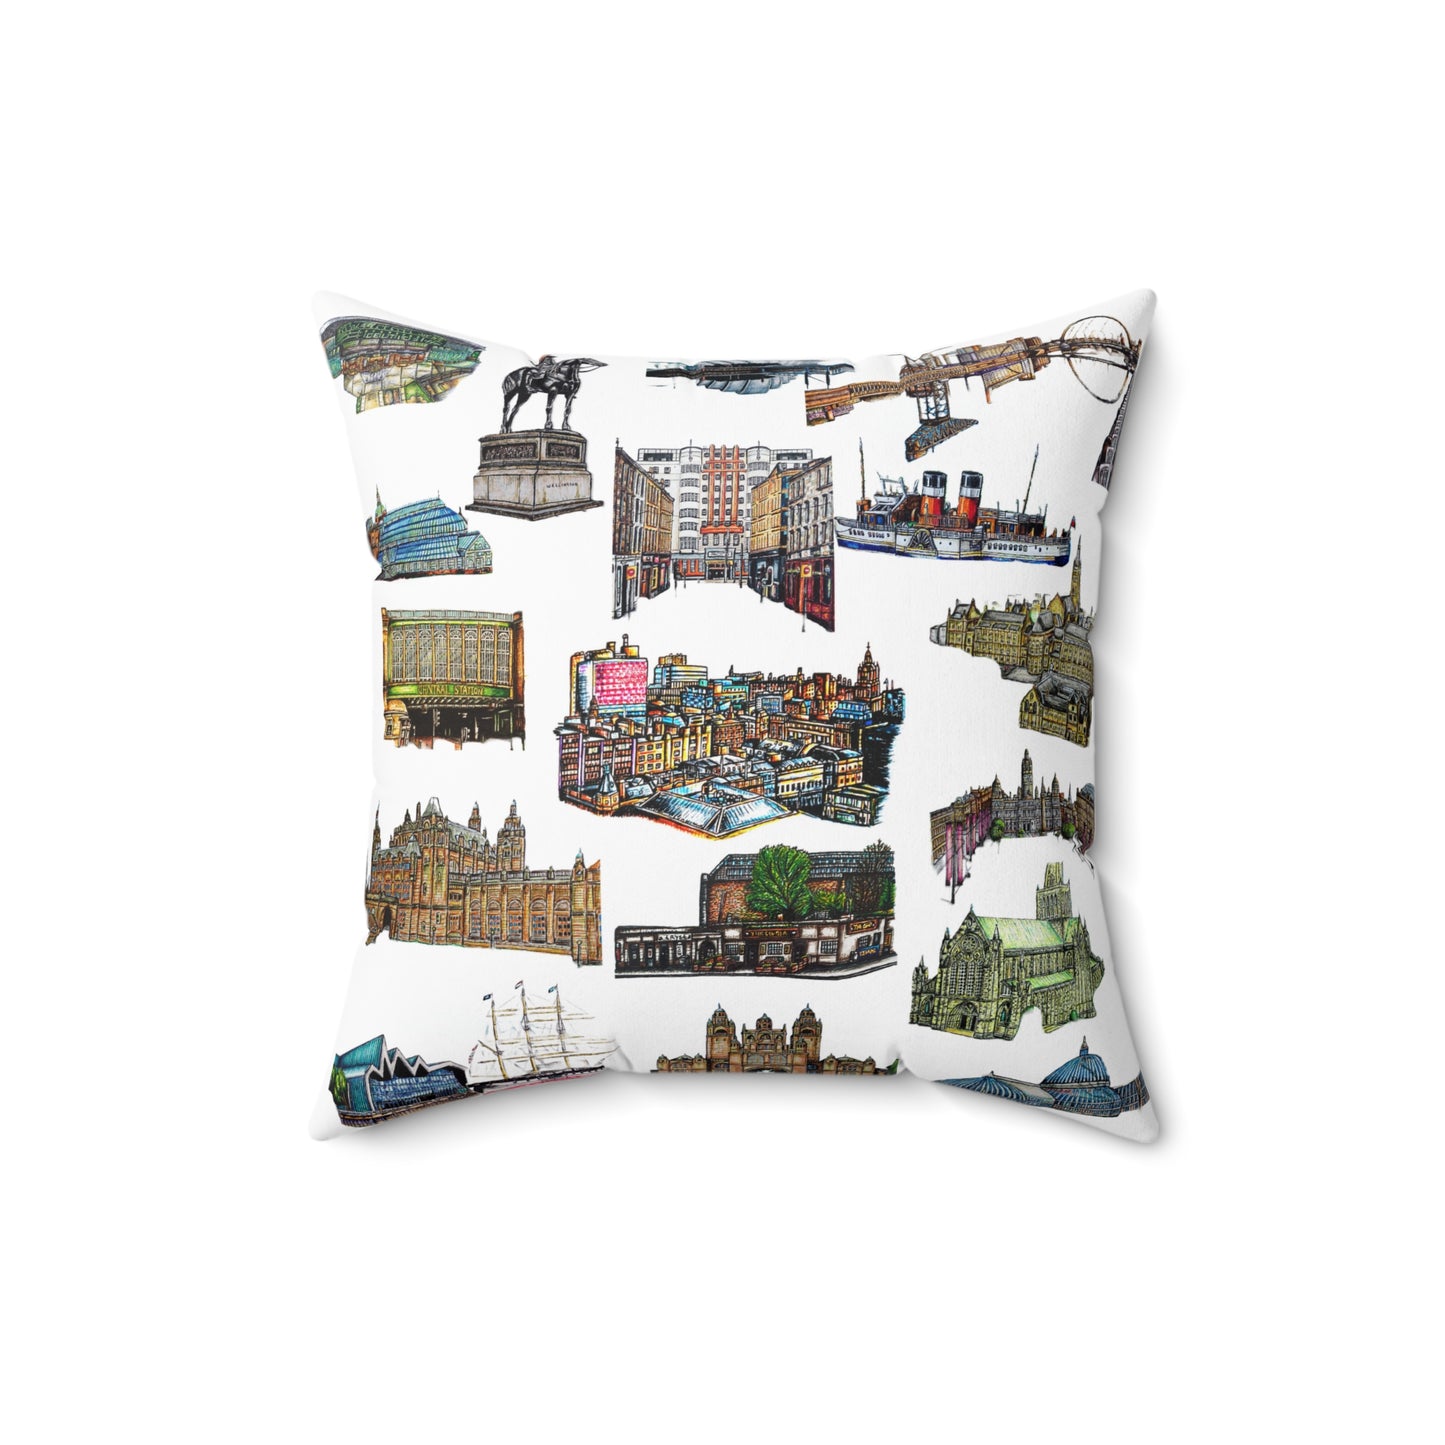 Indoor Decorative cushion- The Glasgow Design